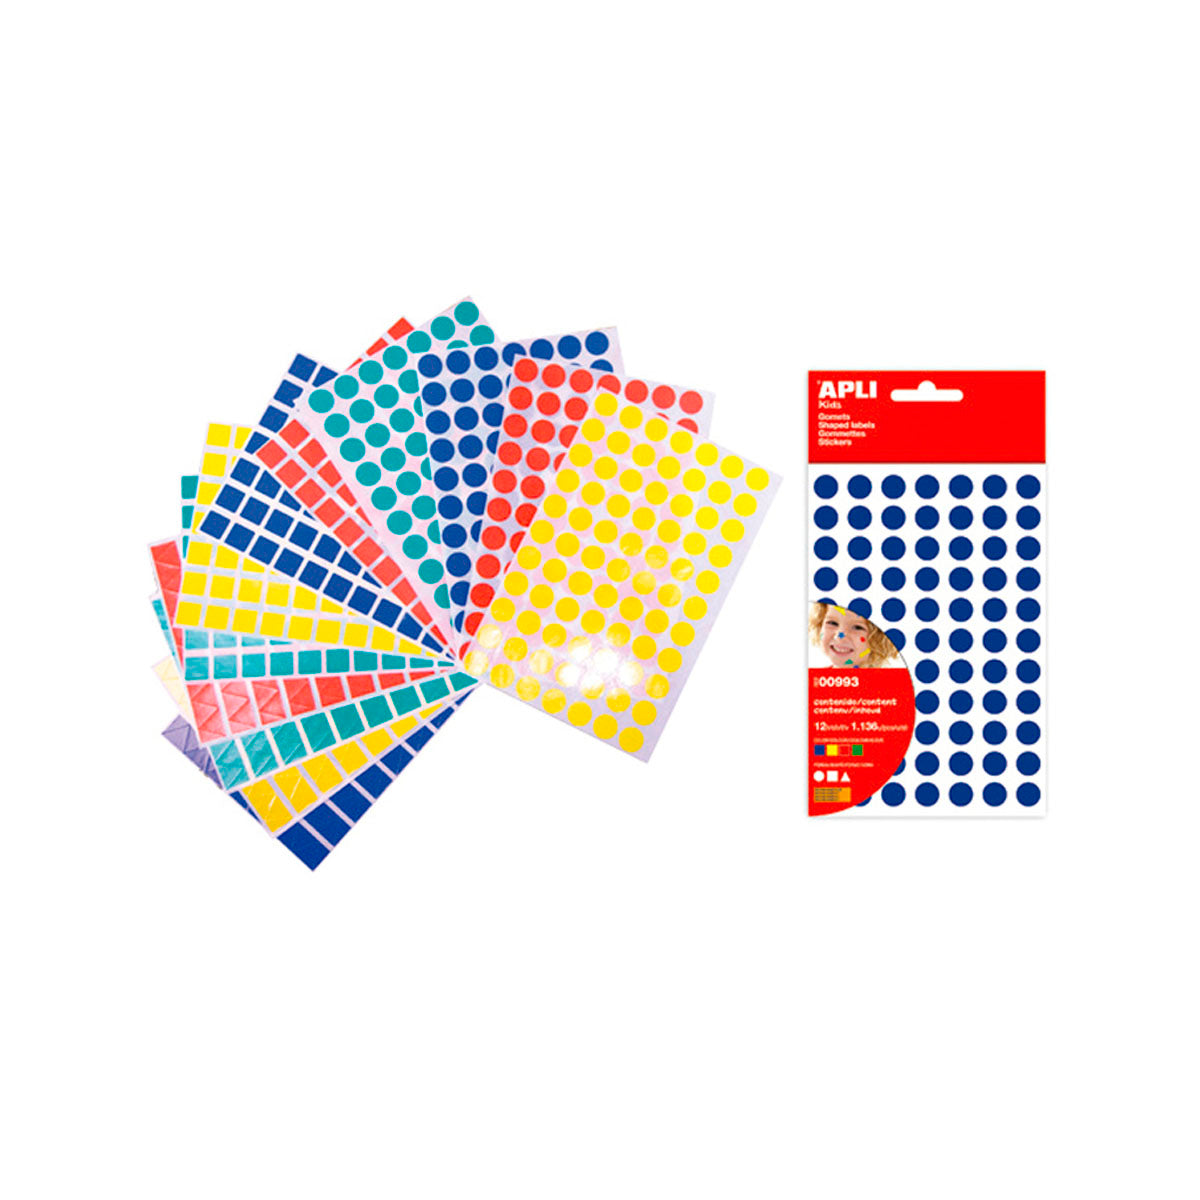 APLI - Gomets Autoadhesivo Multicolor, 822 Unidades